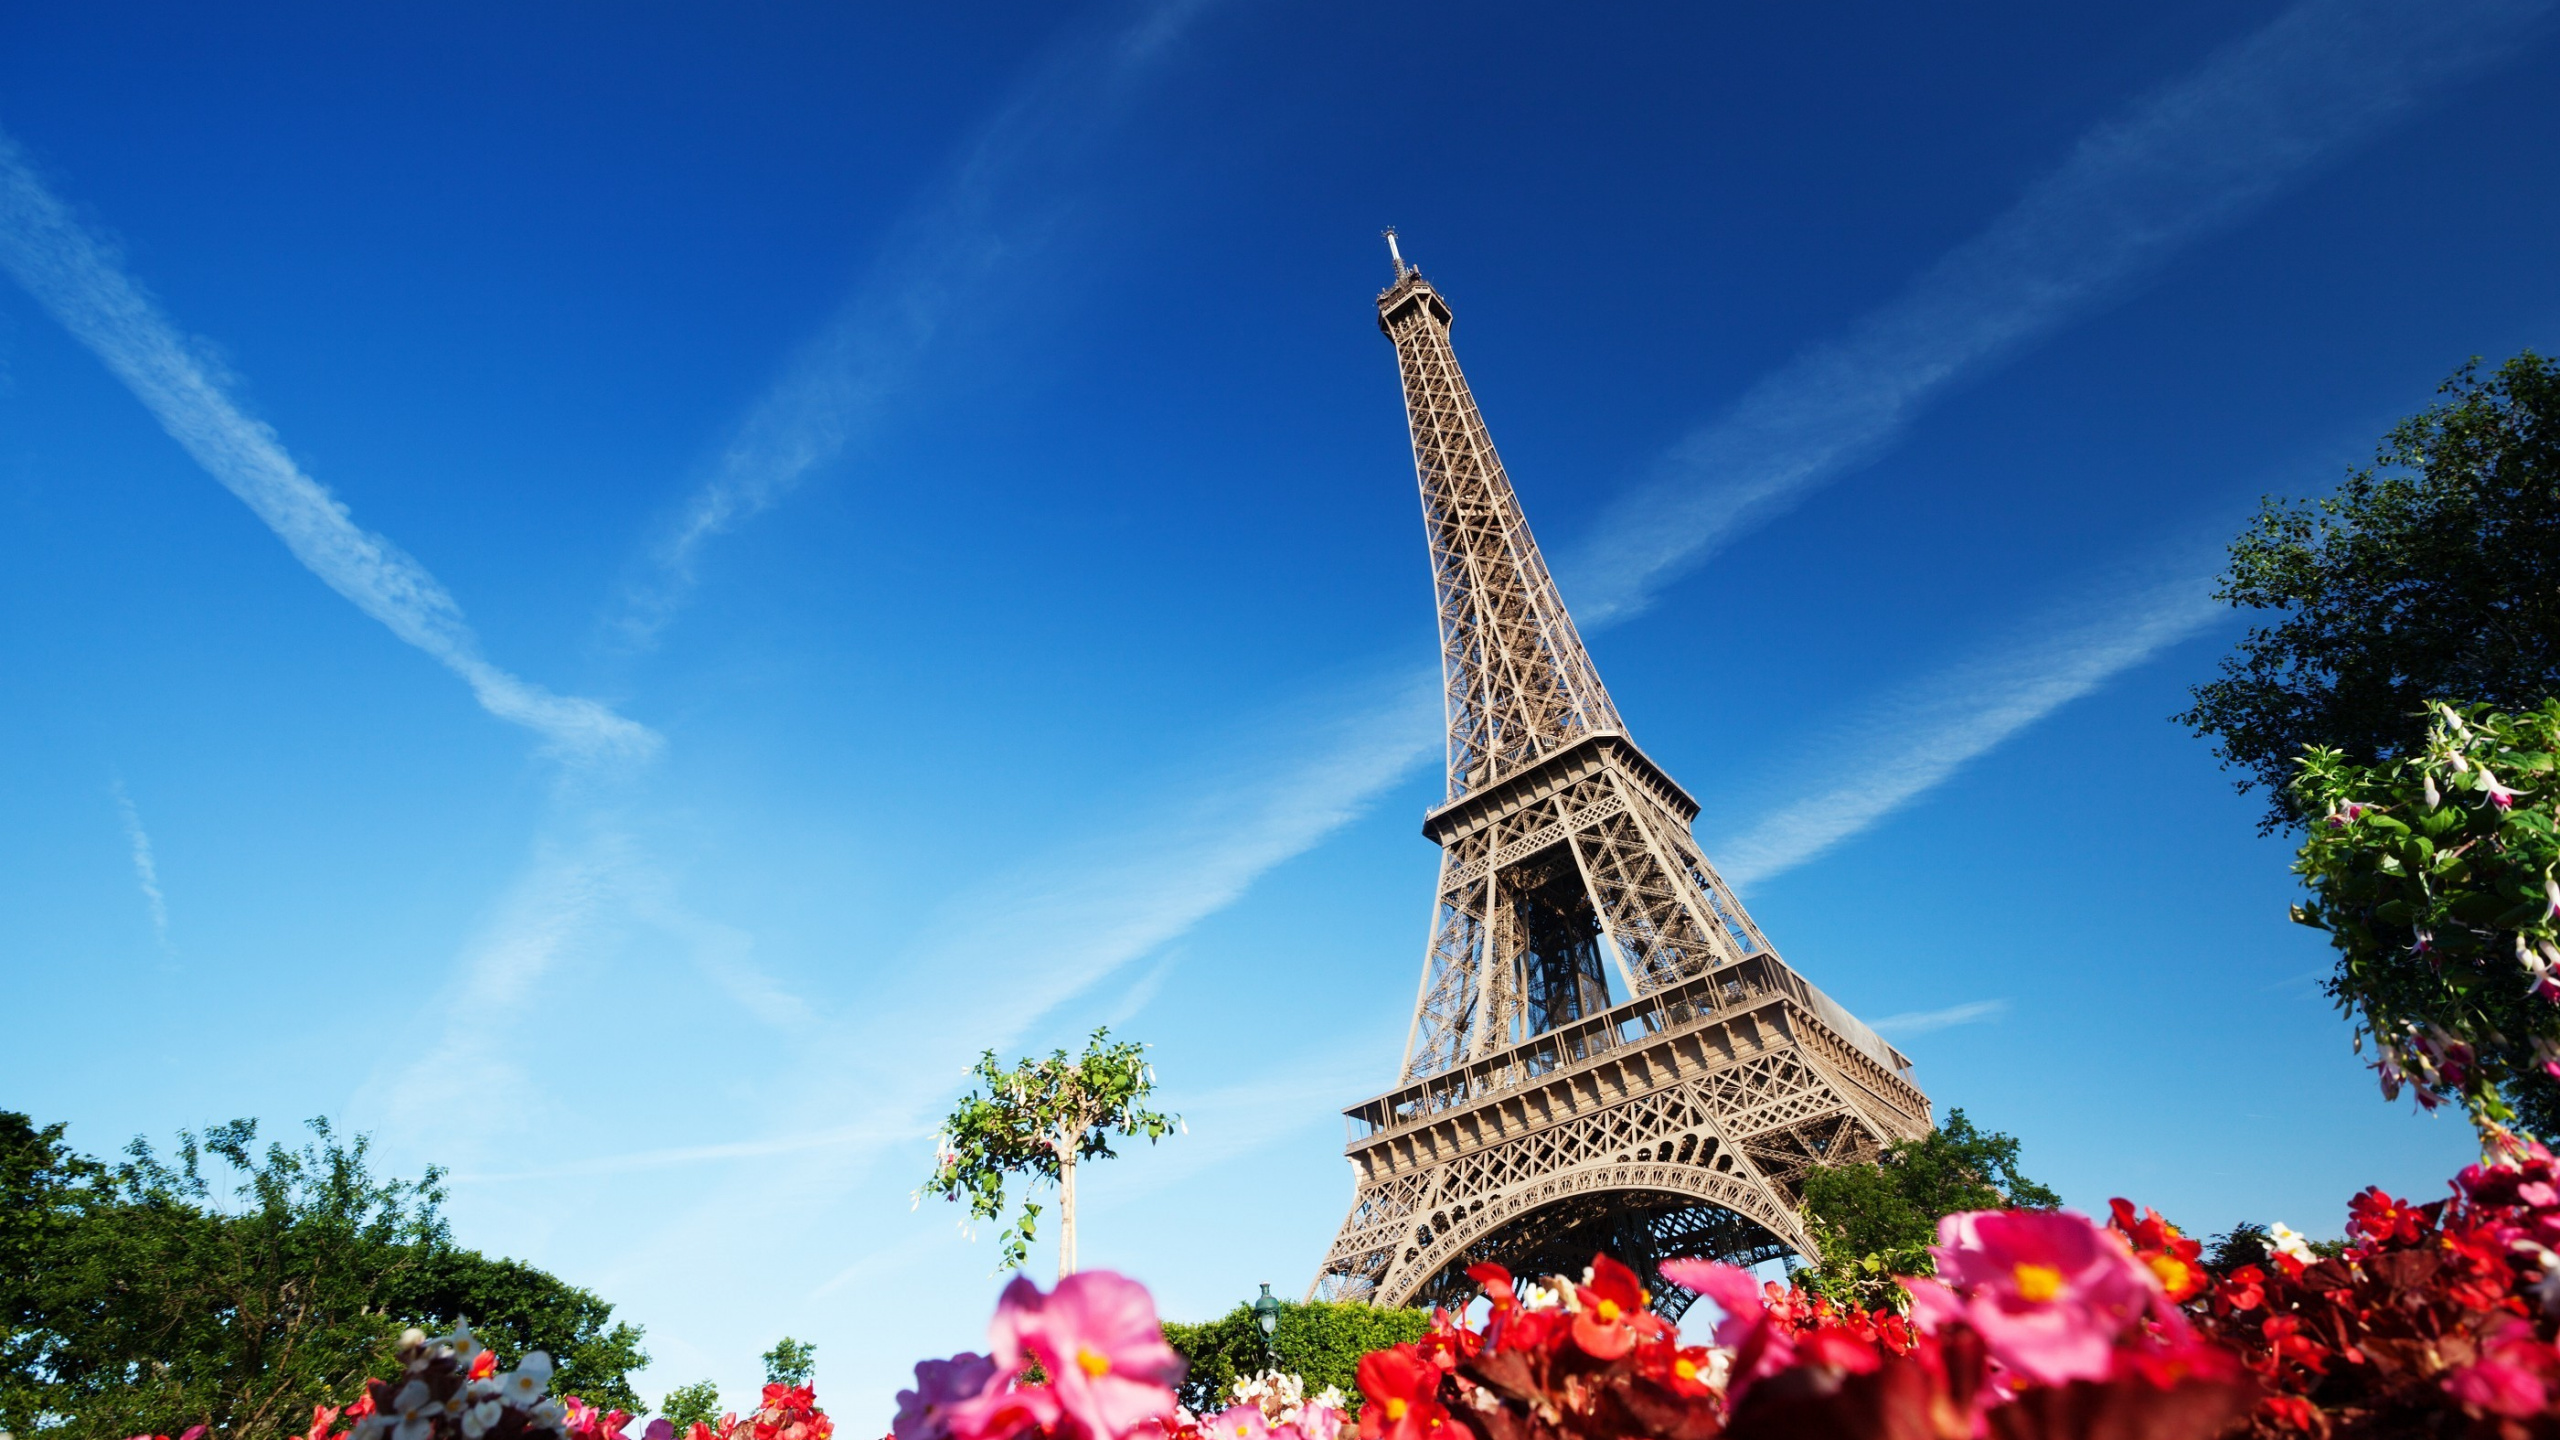 Eiffel Tower Under Blue Sky During Daytime. Wallpaper in 2560x1440 Resolution